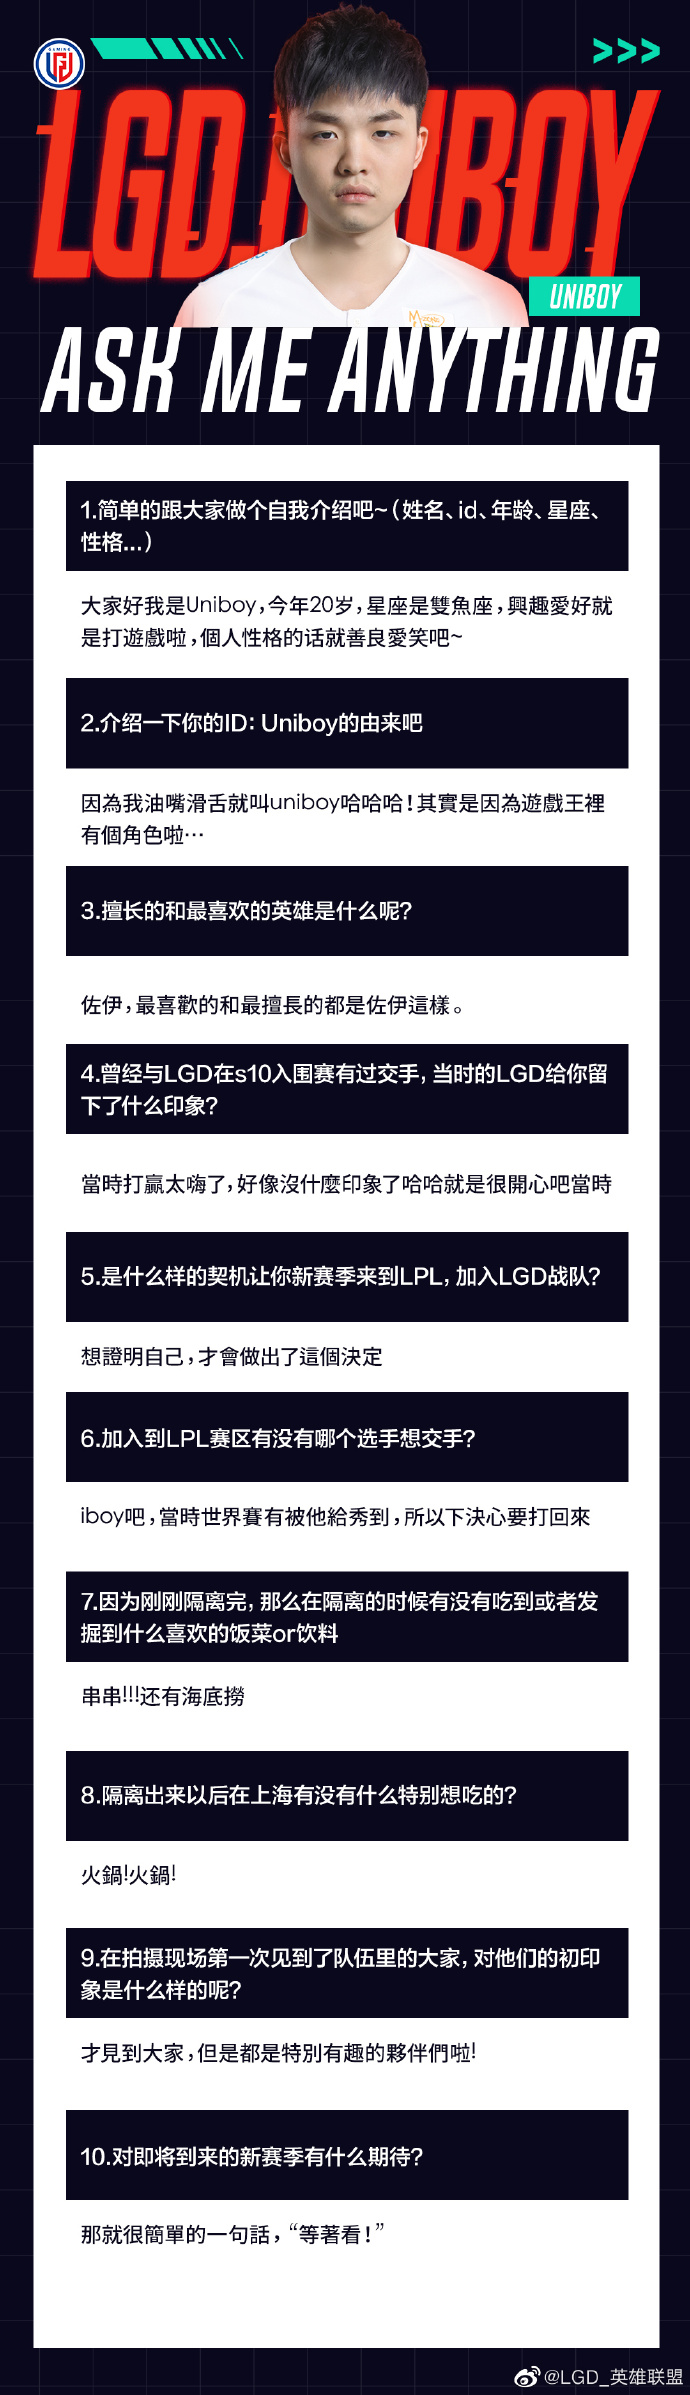 Uniboy小采访：想和iBoy交手，世界赛被他秀了，下决心要打回来